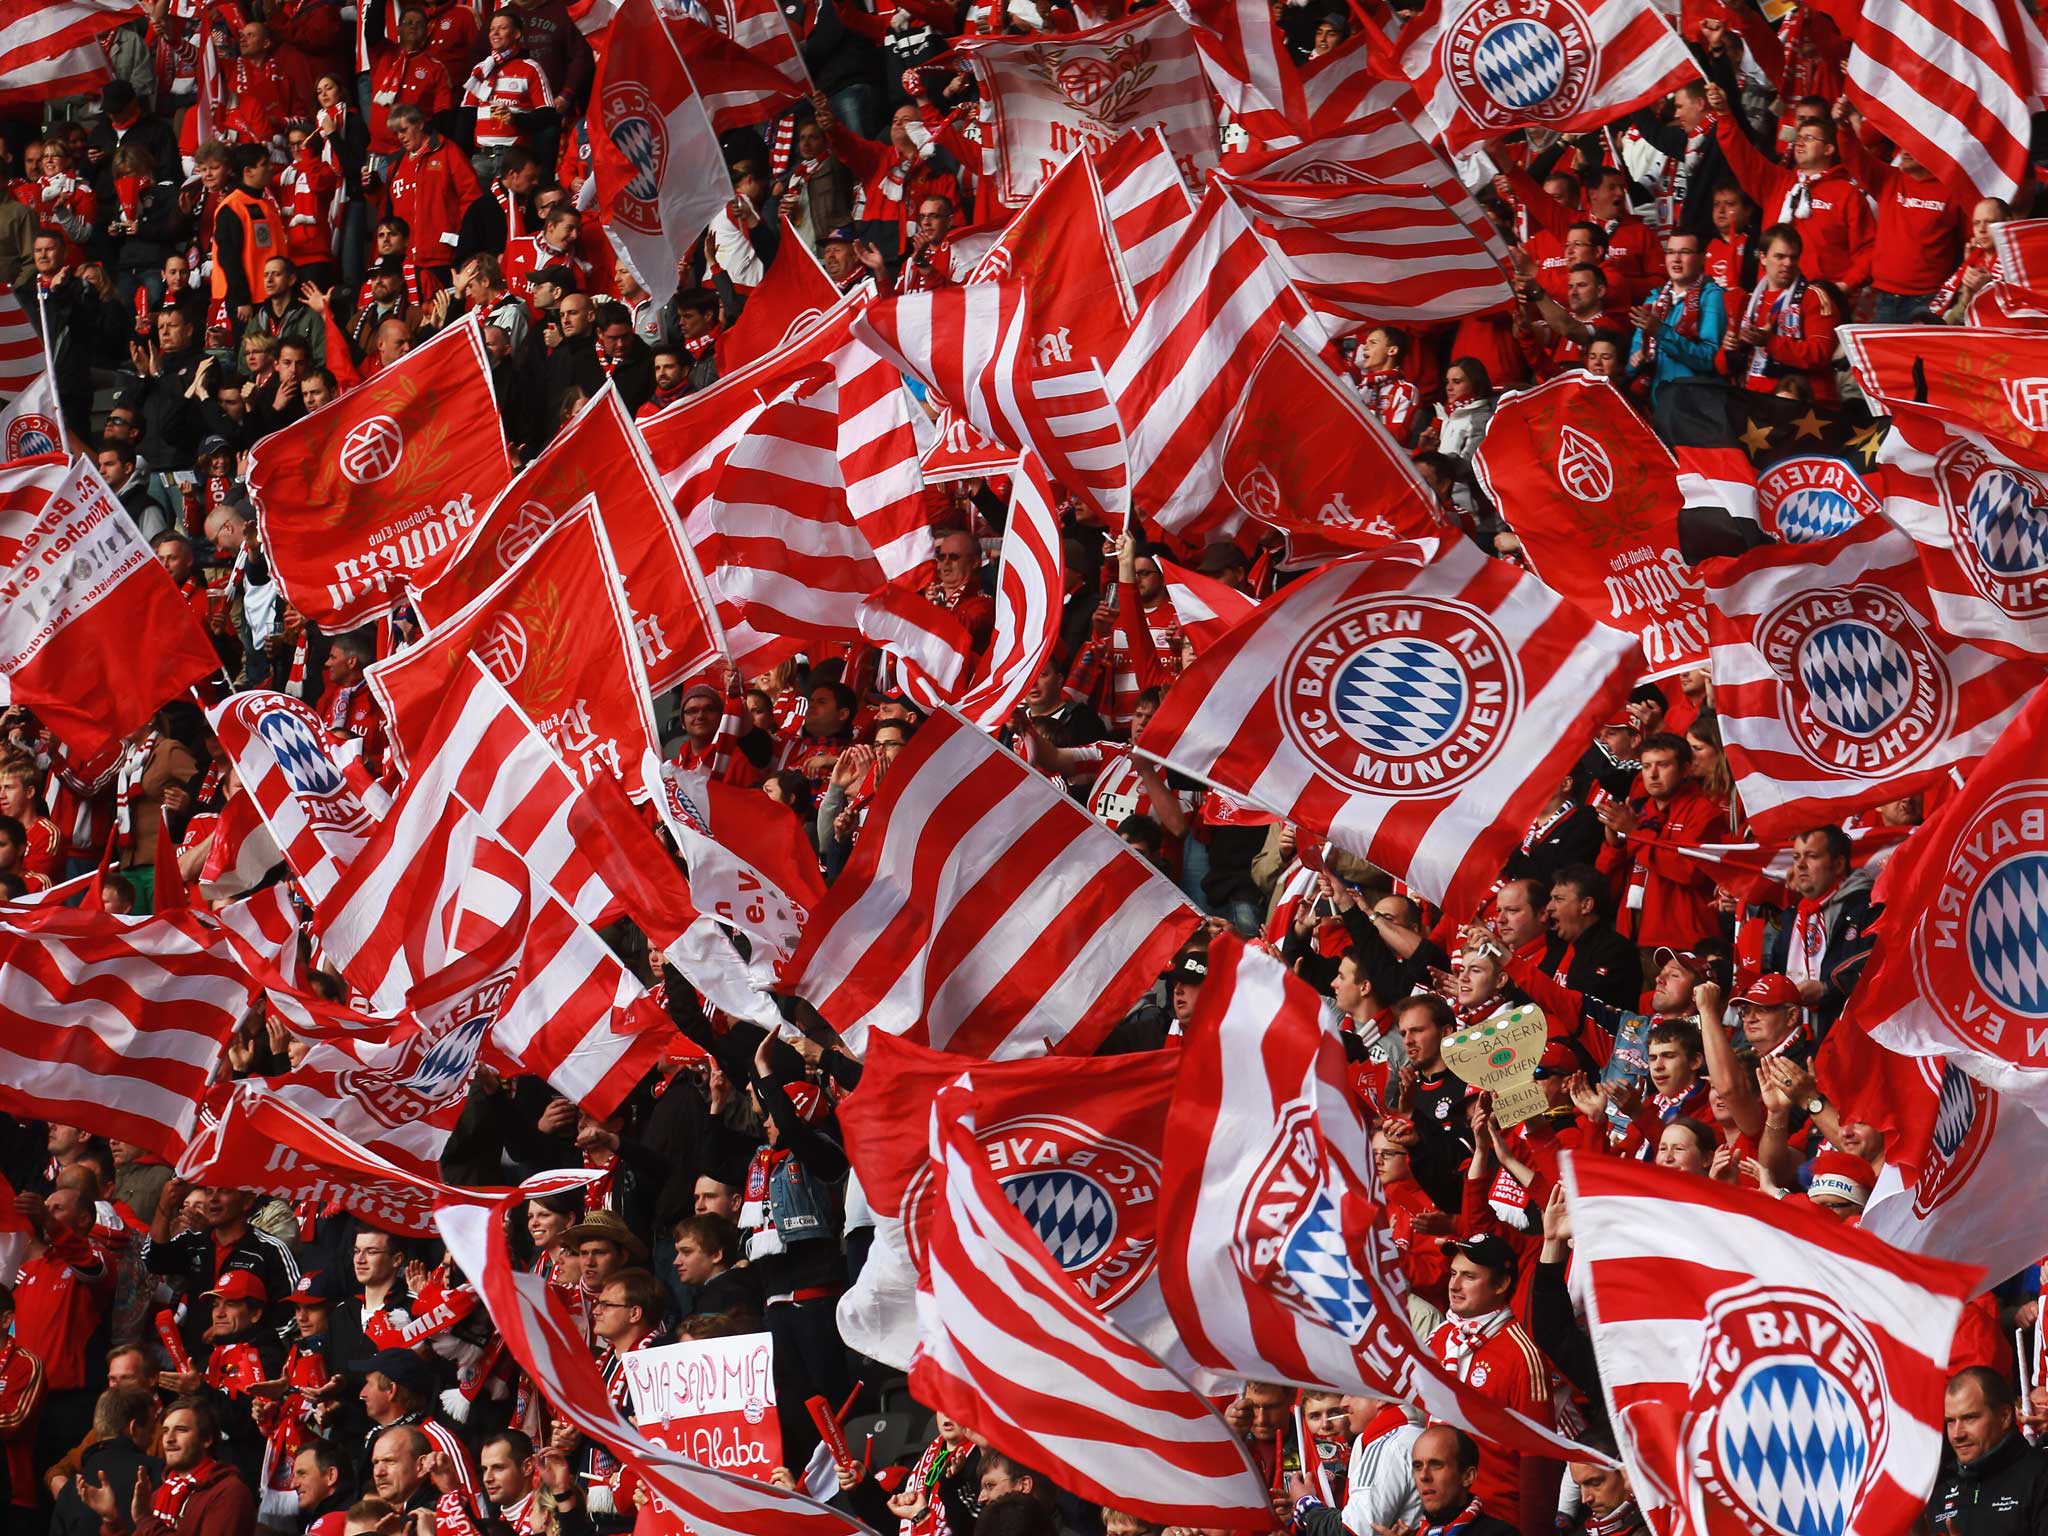 Crowds support Bayern Munich at a recent match